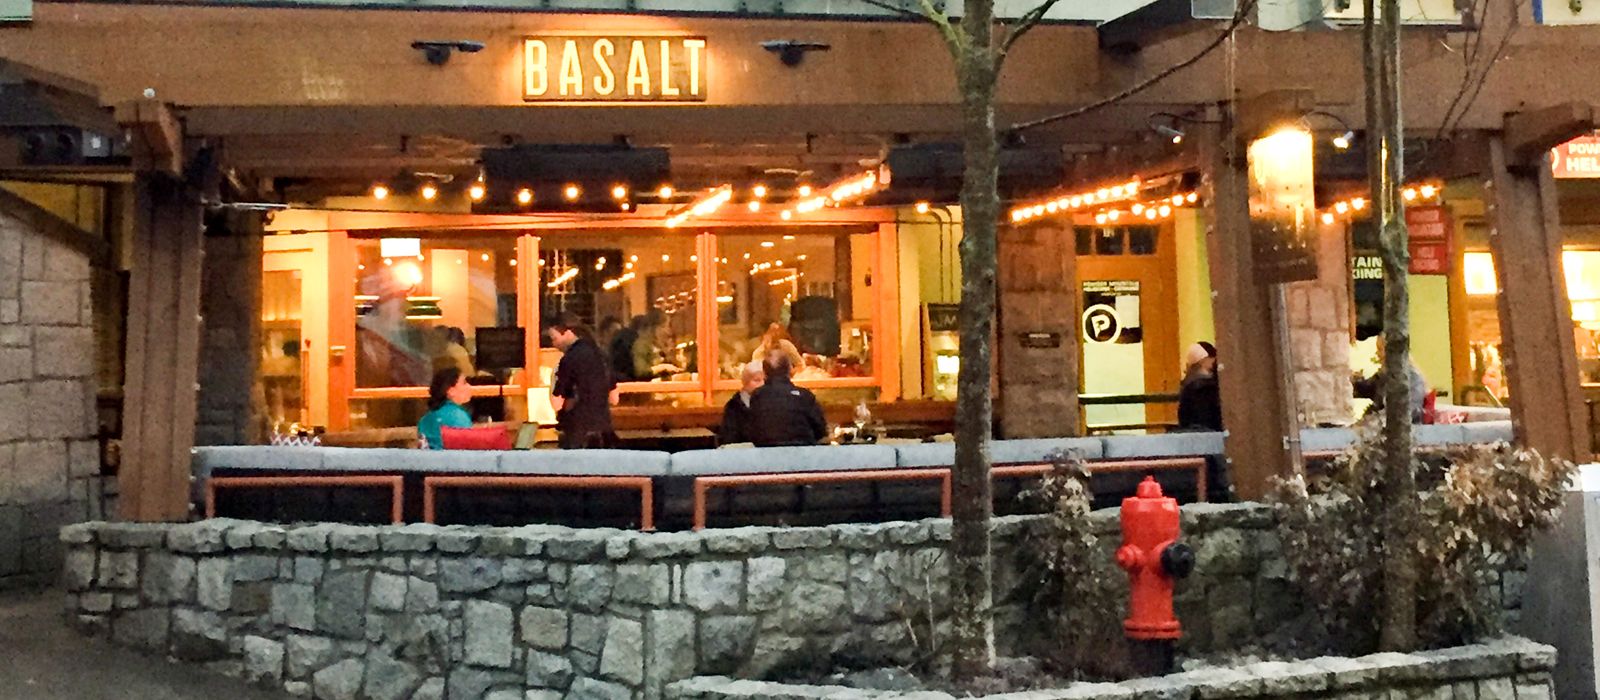 Basalt Restaurant